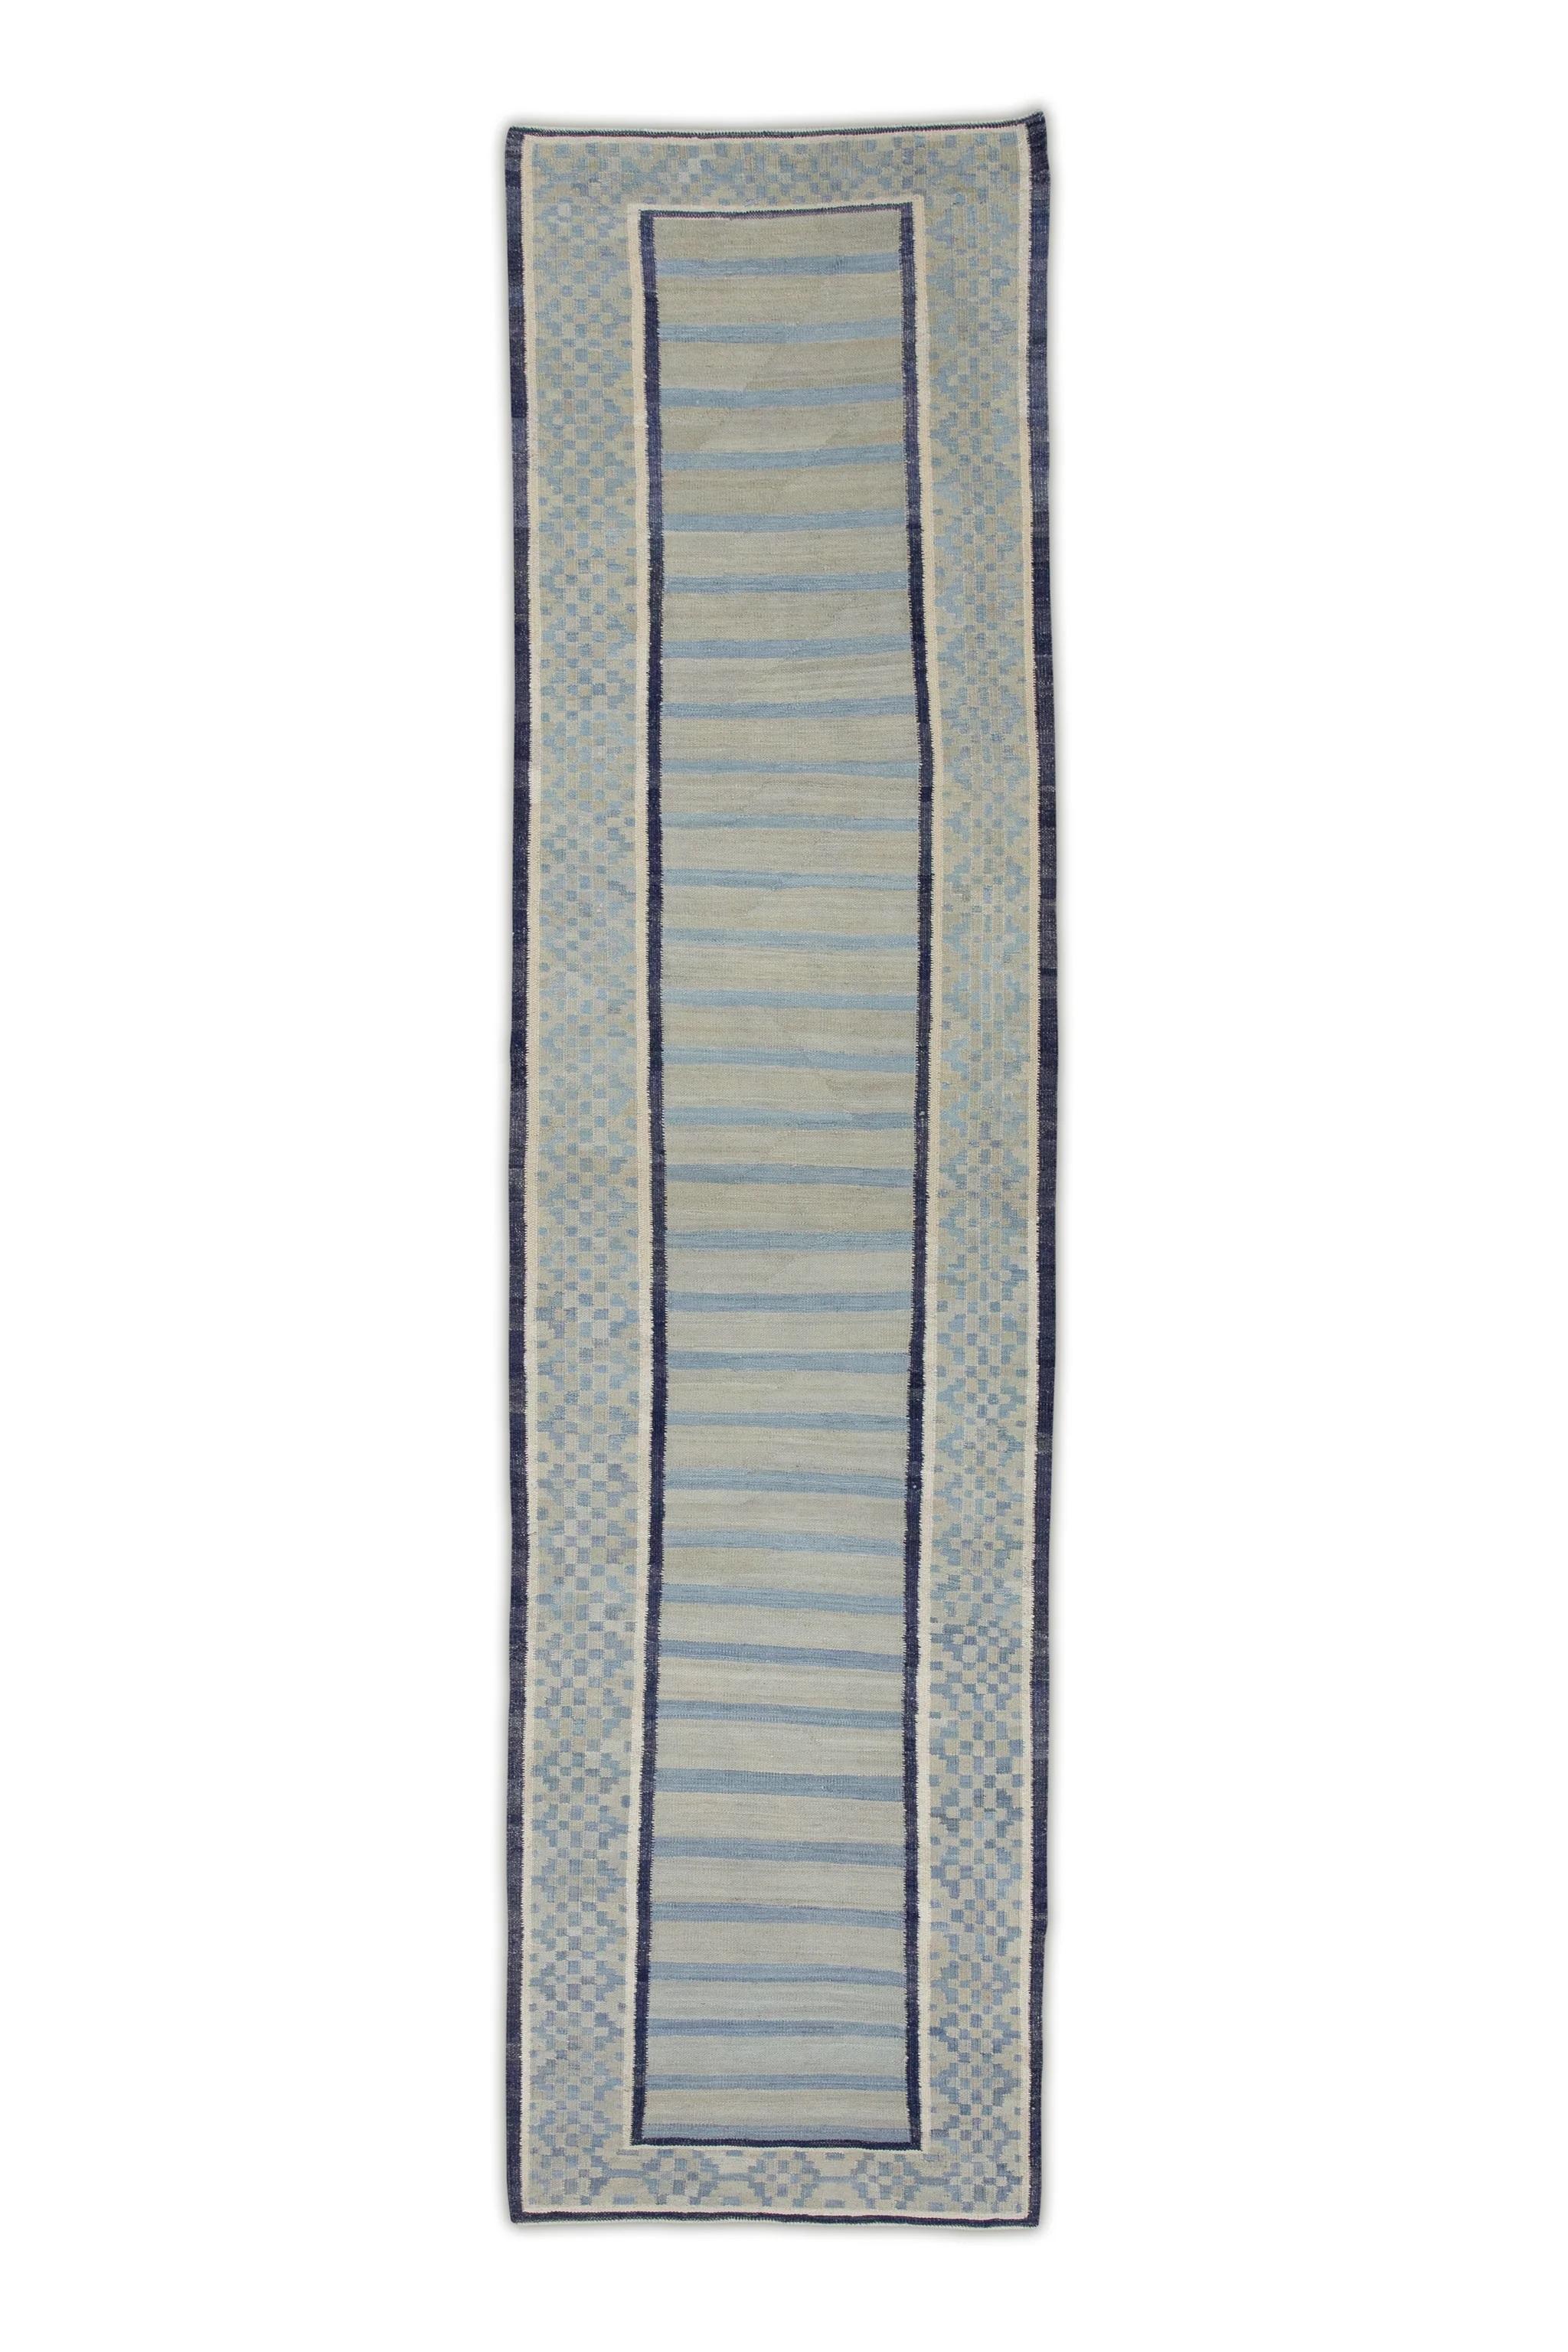 Contemporary Flatweave Handmade Wool Runner in Blue Geometric Pattern 2'11